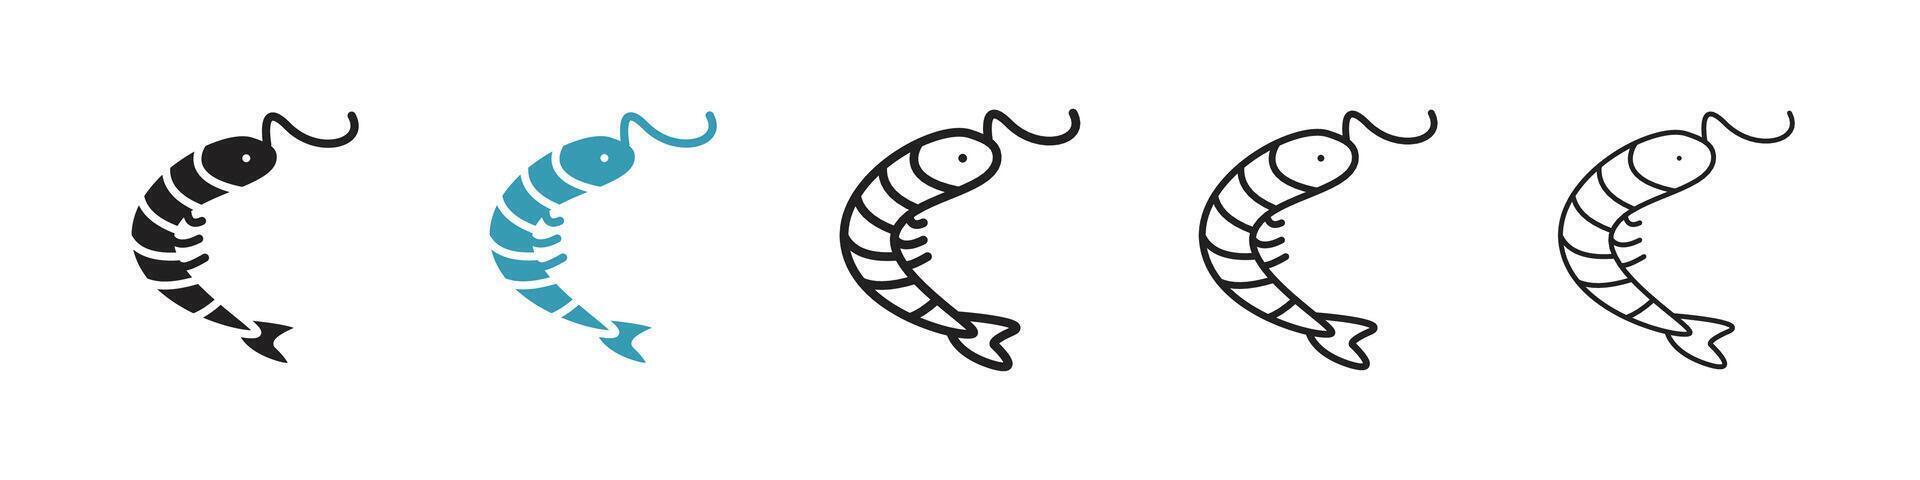 Shrimp vector icon